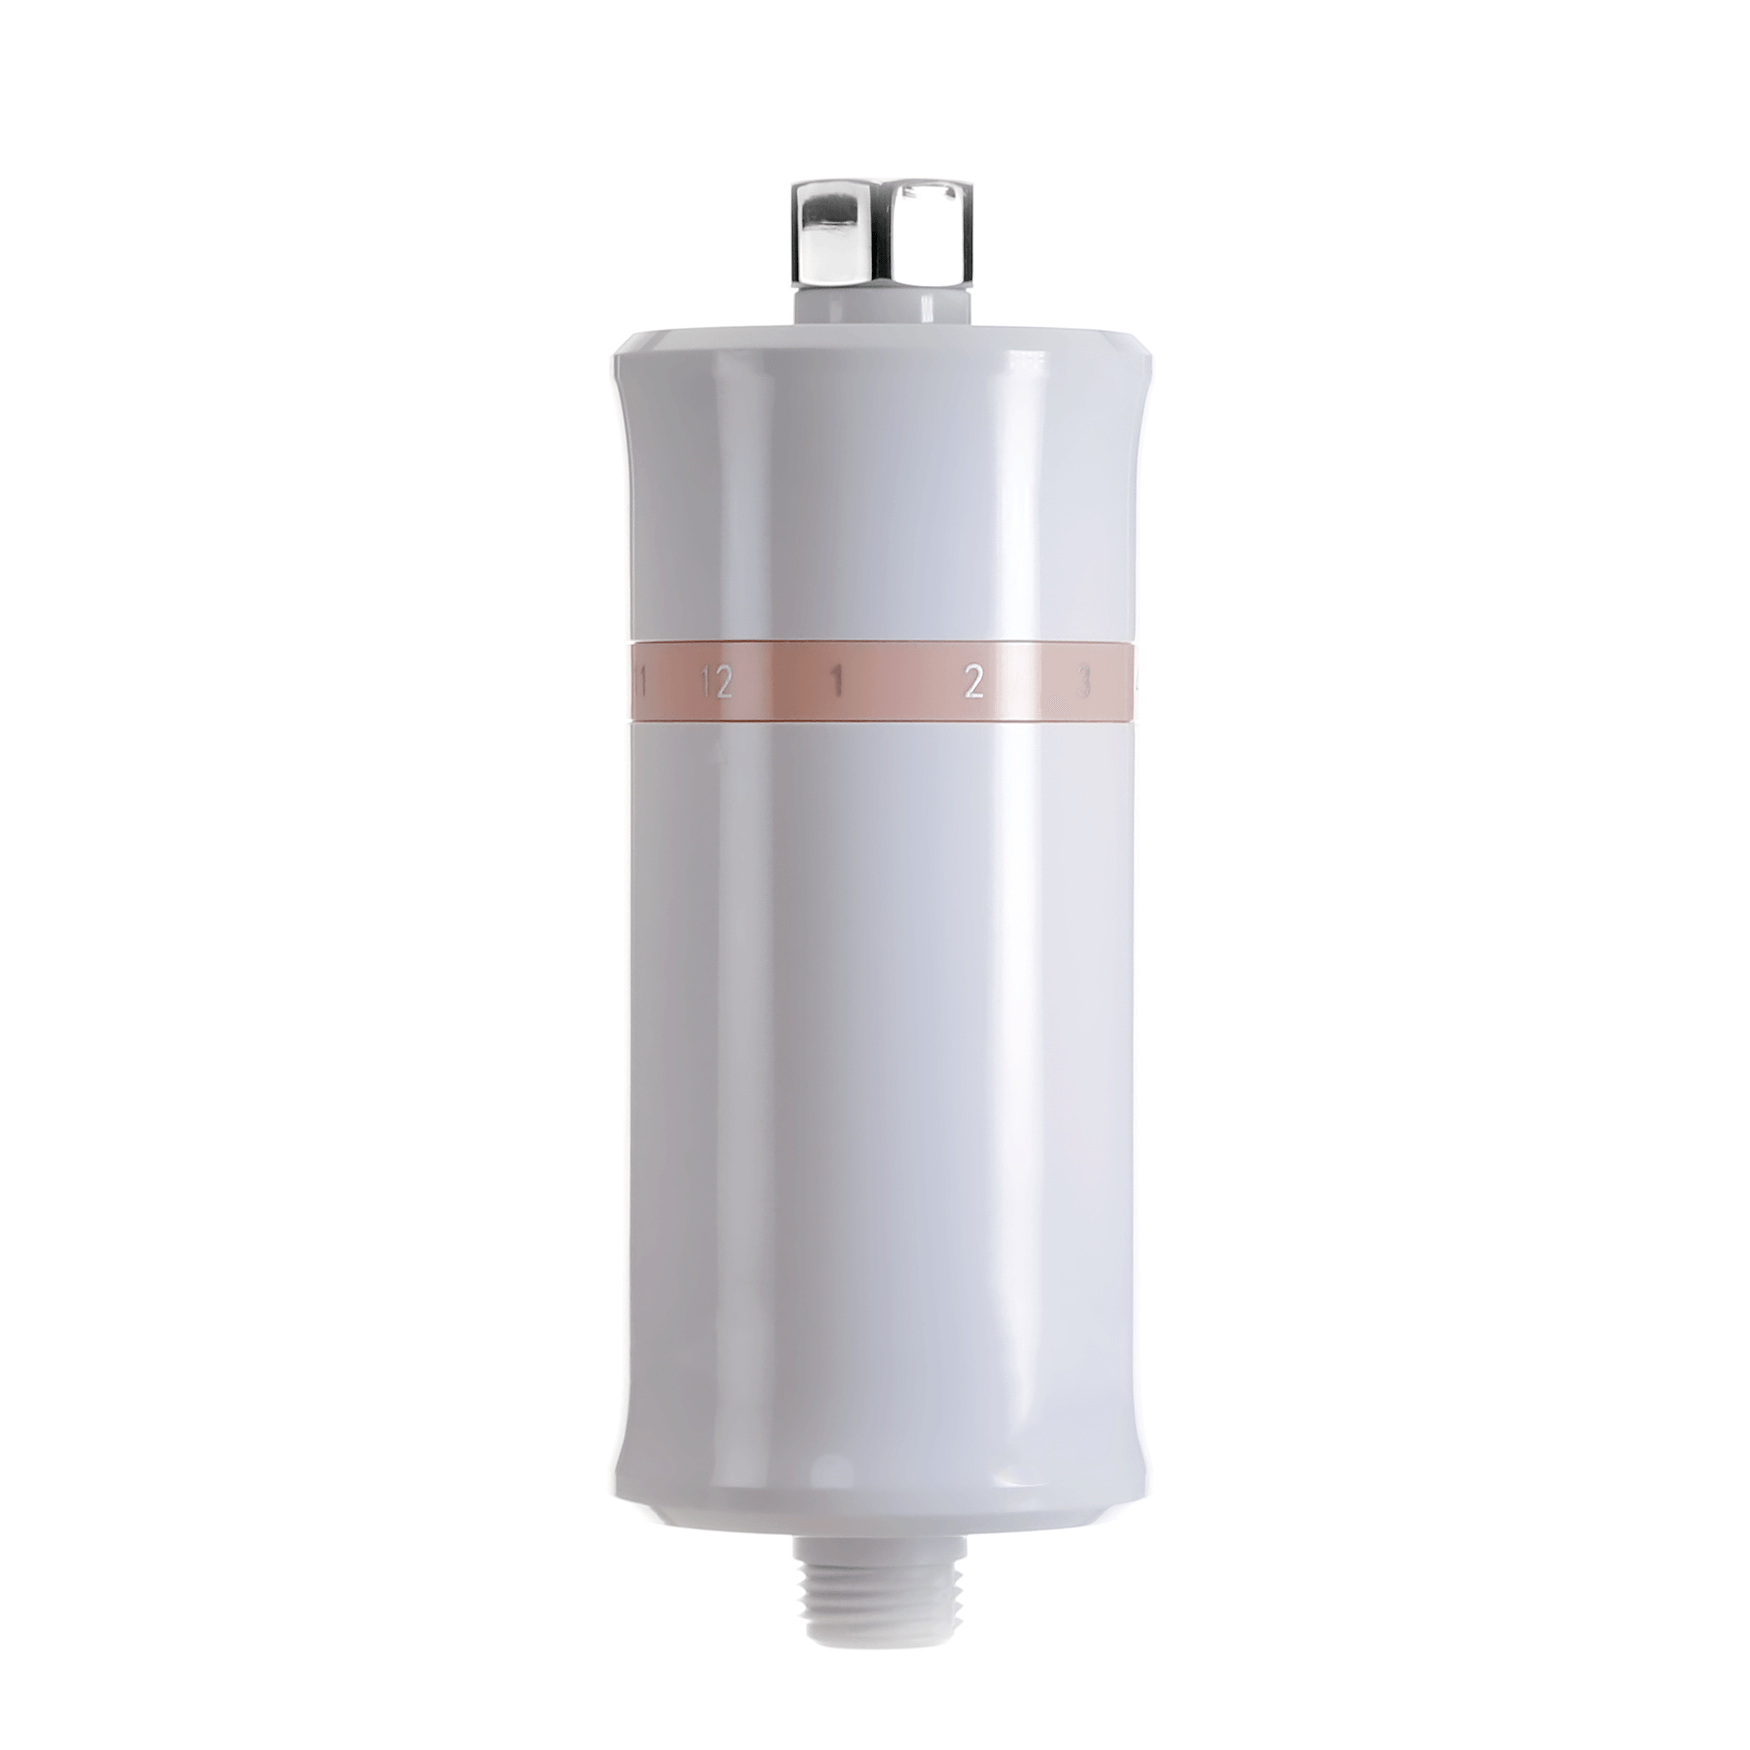 OCEMIDA Cylindrical Shower Filter 